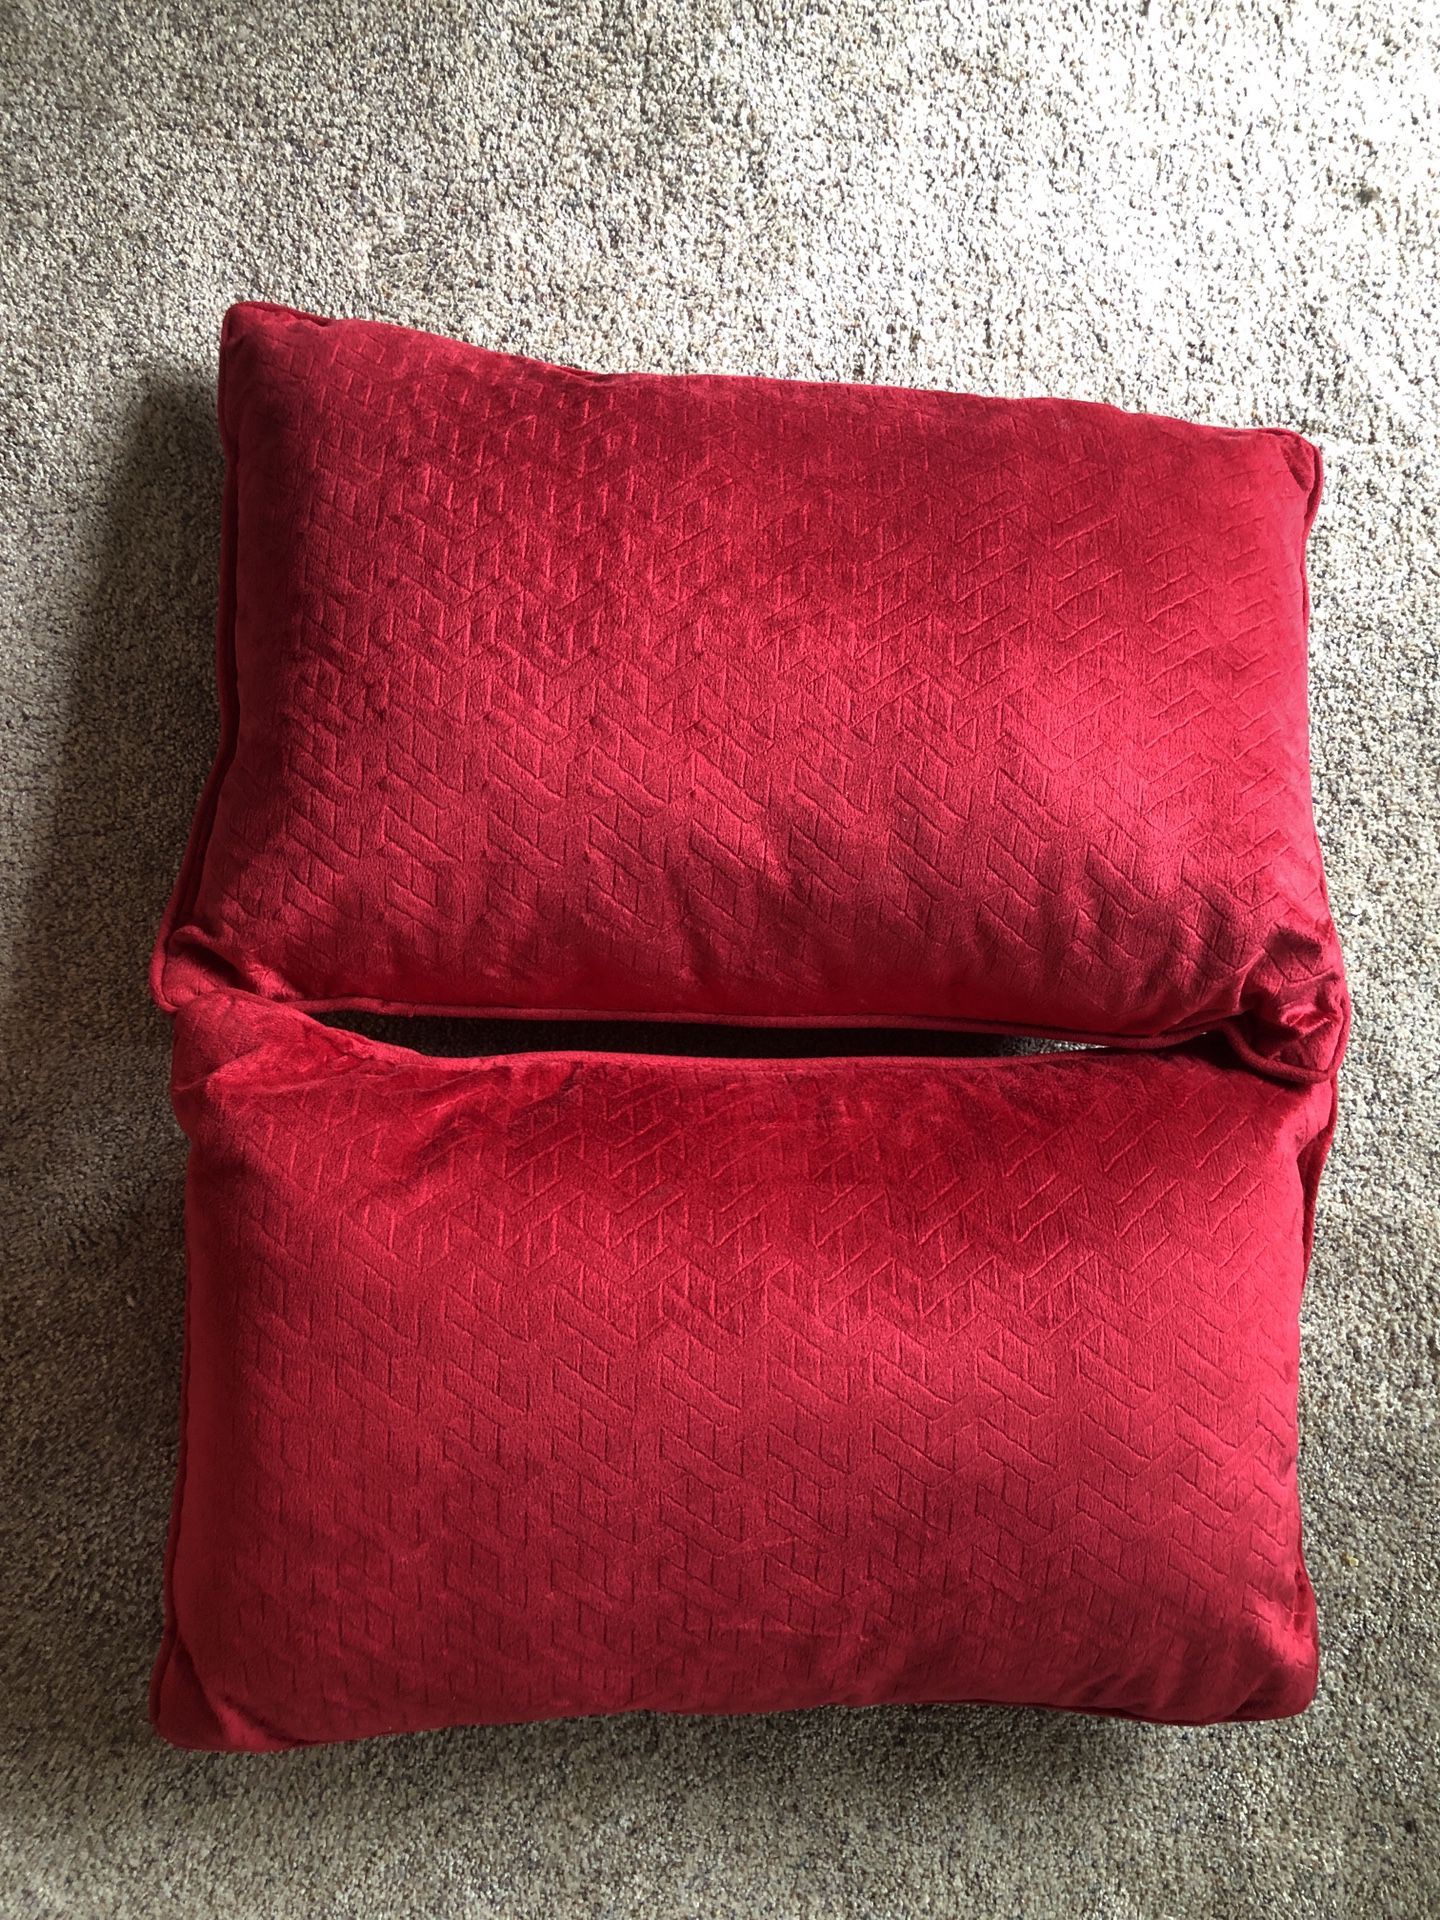 2x red sofa pillows- 15”x23.5”